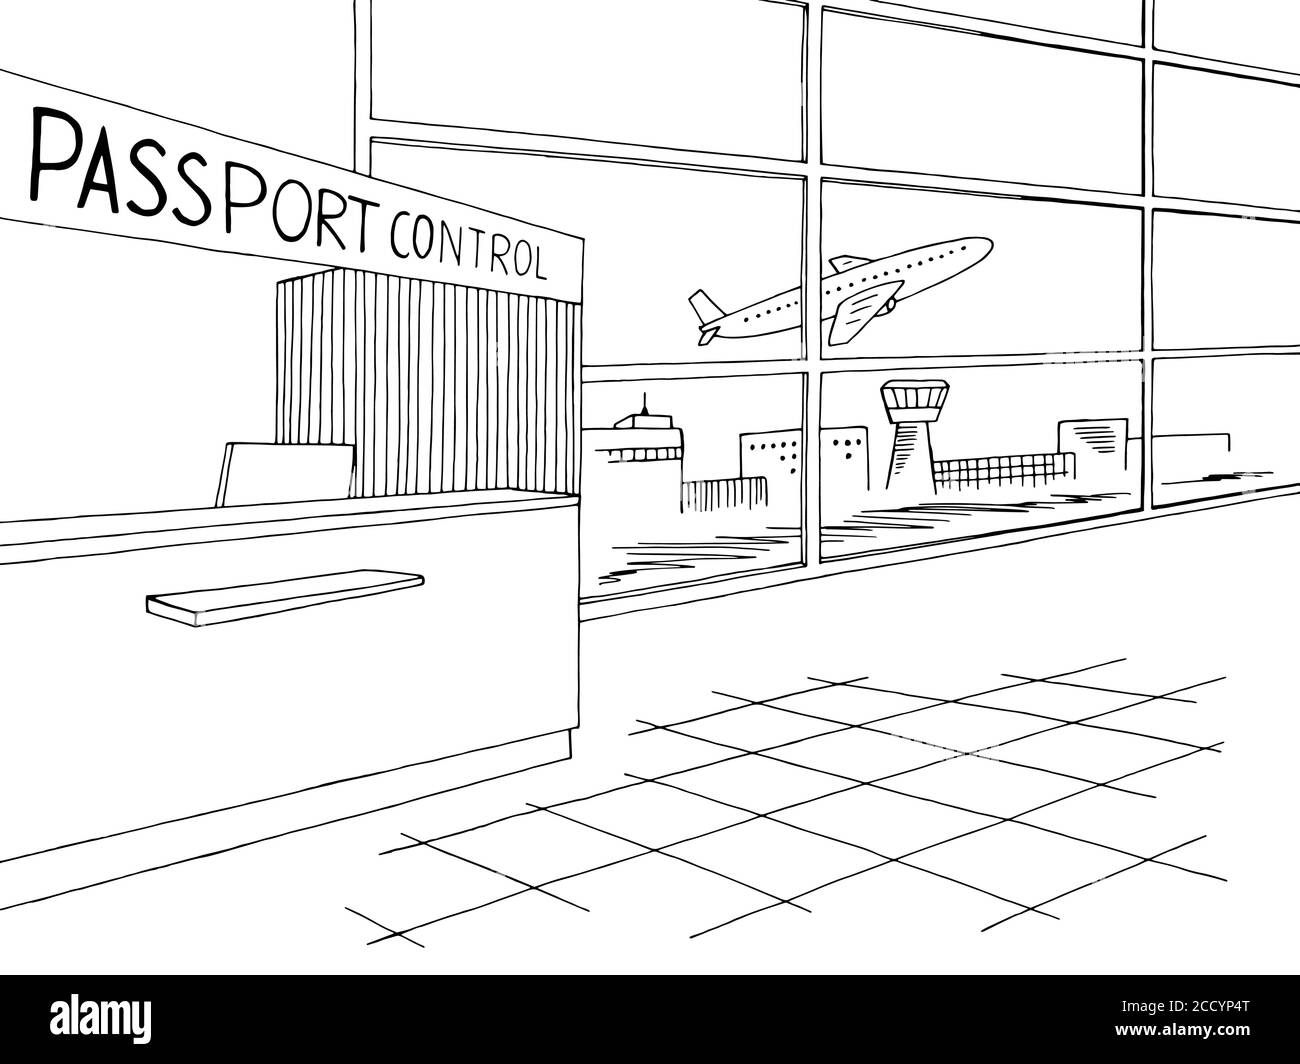 Passport control airport interior graphic black white sketch illustration vector Stock Vector